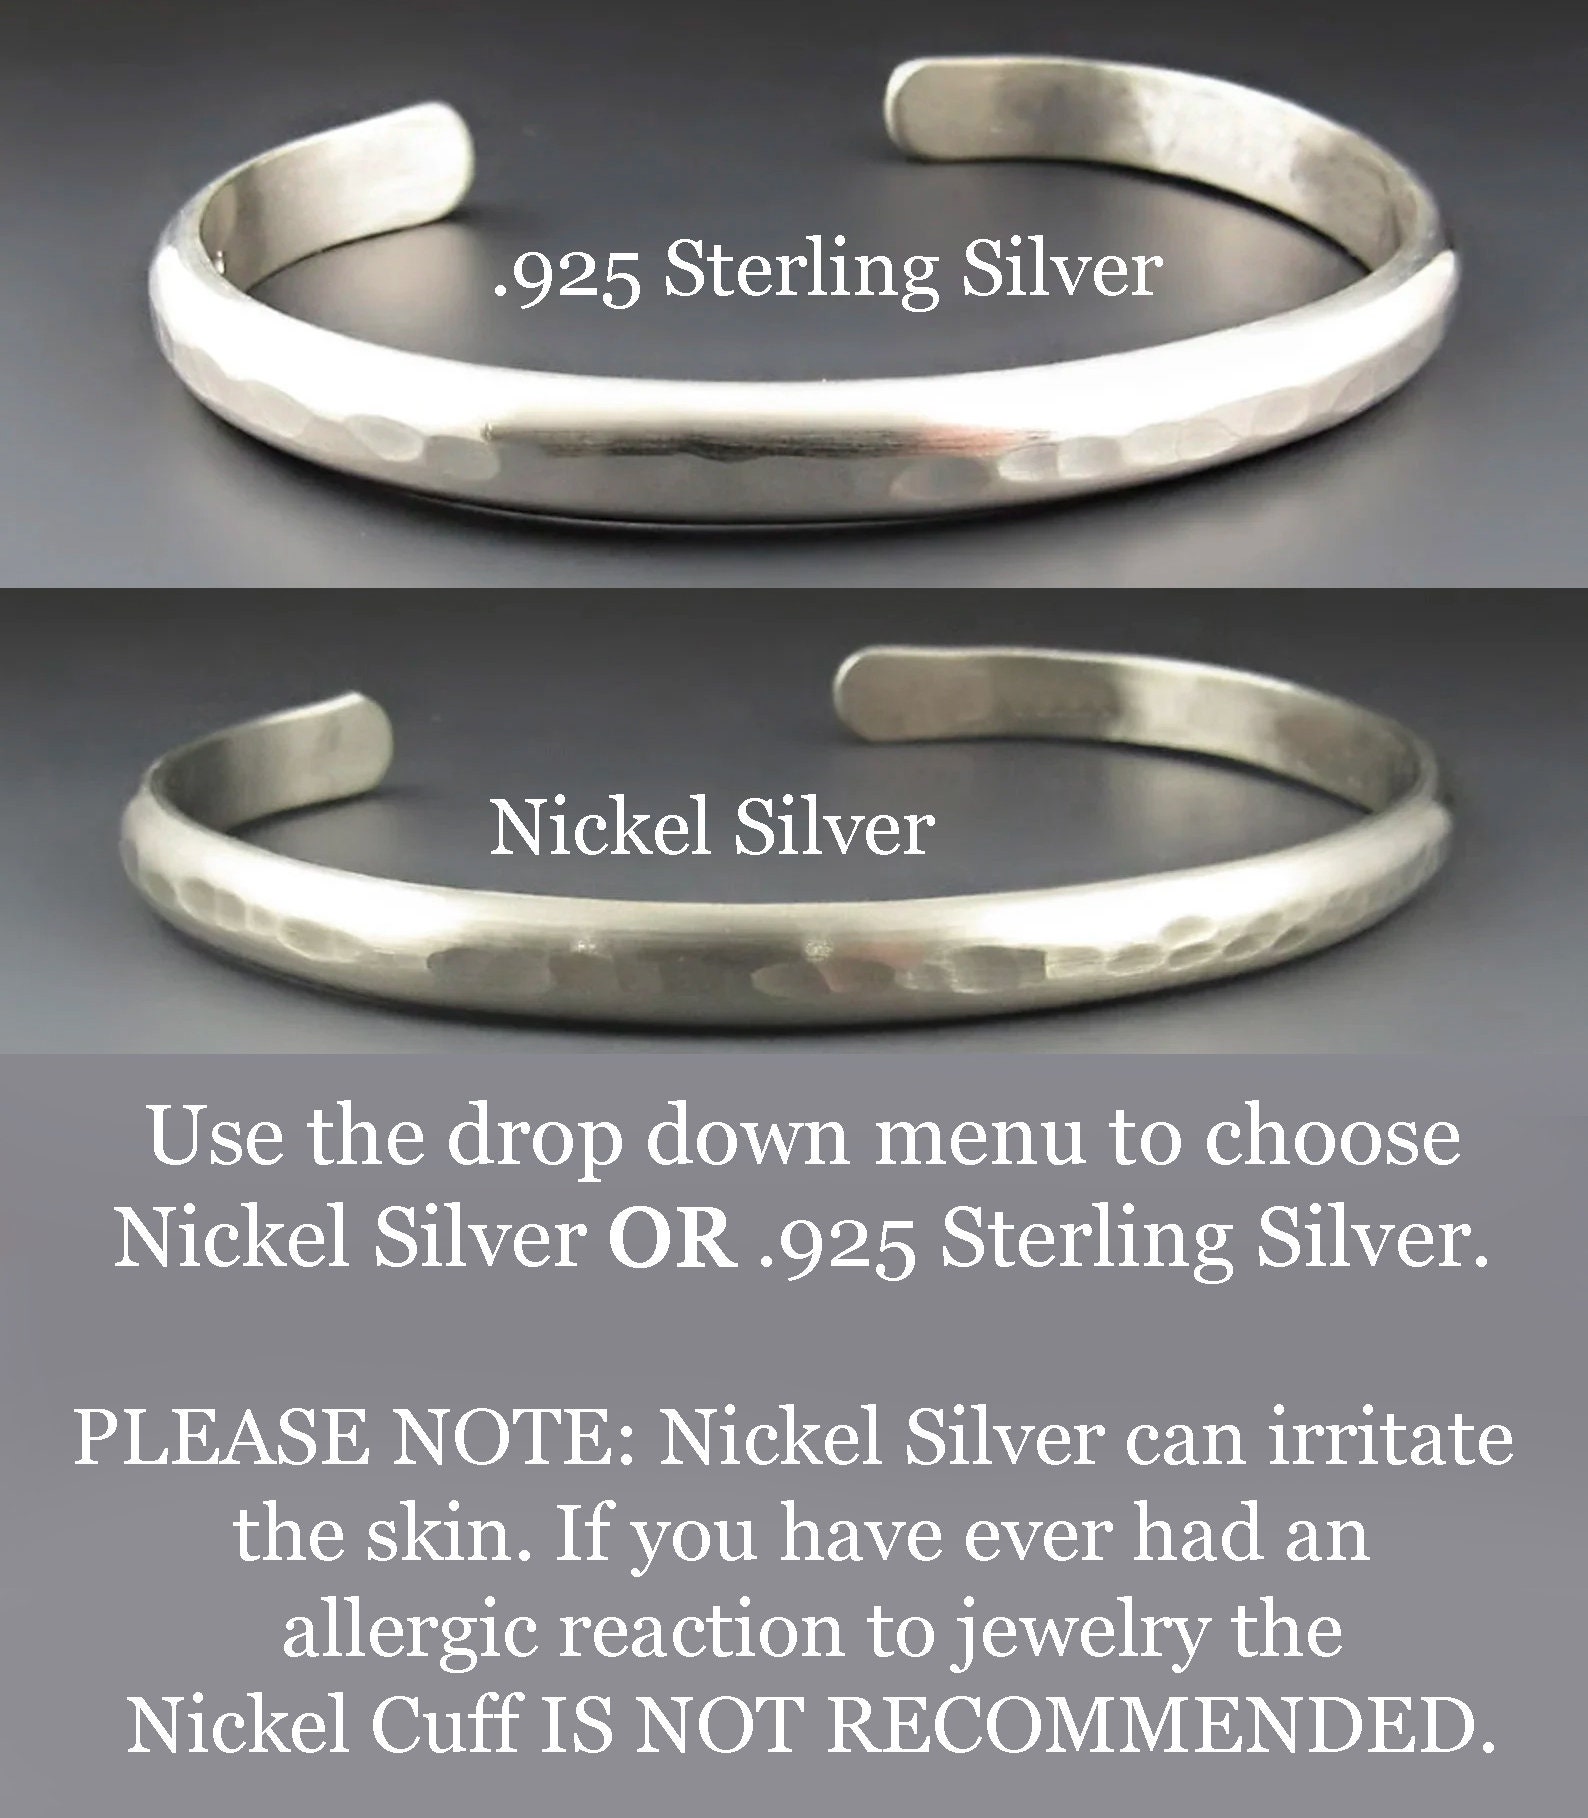 Sterling Silver Hammered Cuff Bracelet 46x63mm